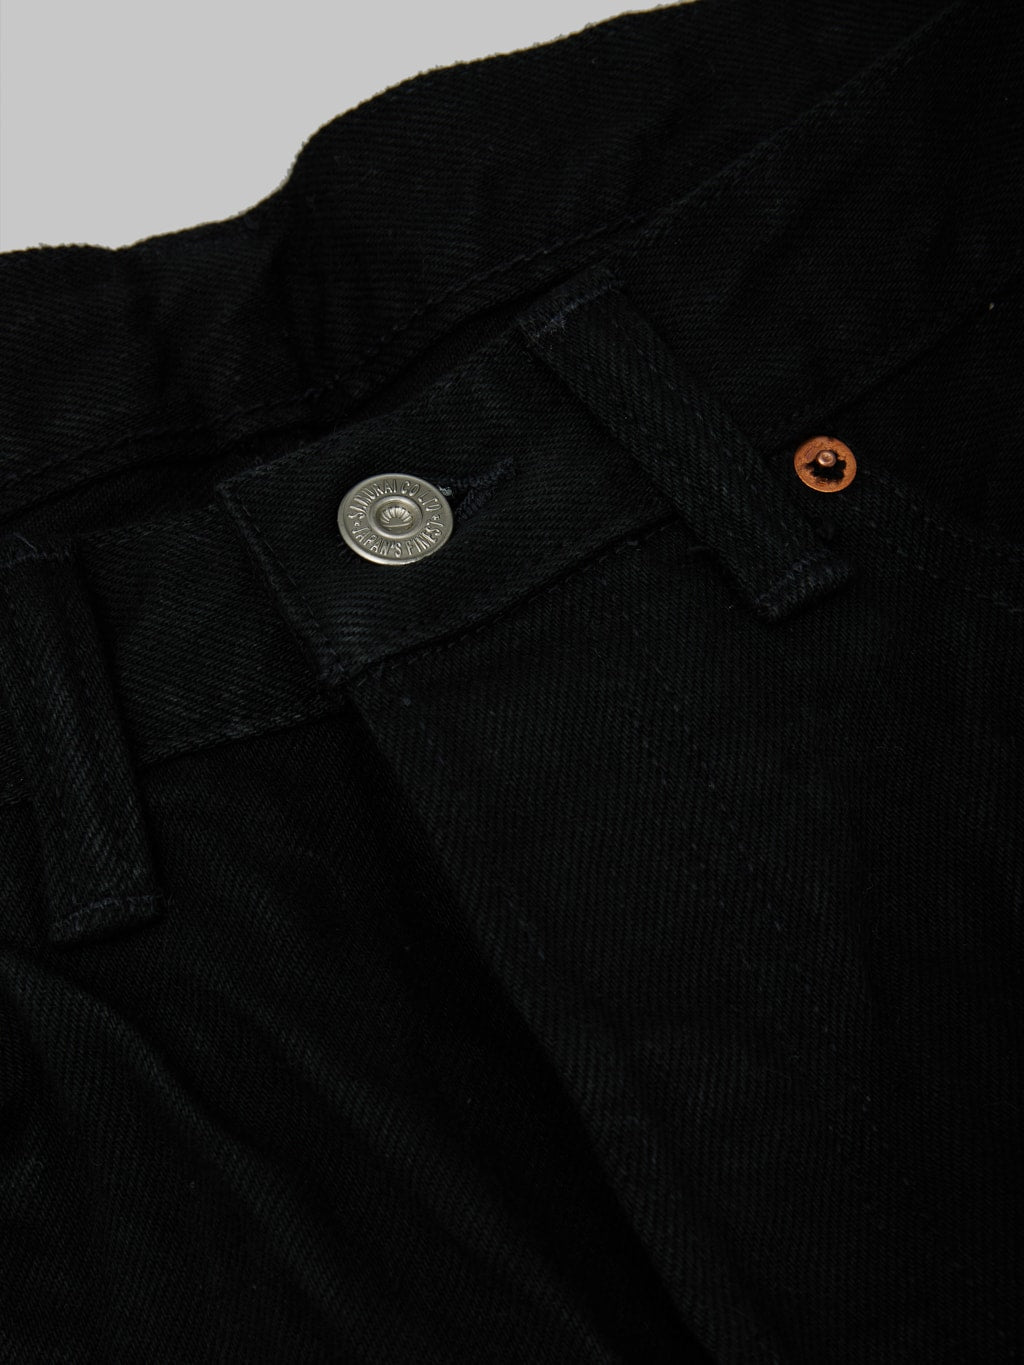 Samurai Jeans Color Fast Black x Black slim straight Jeans iron button